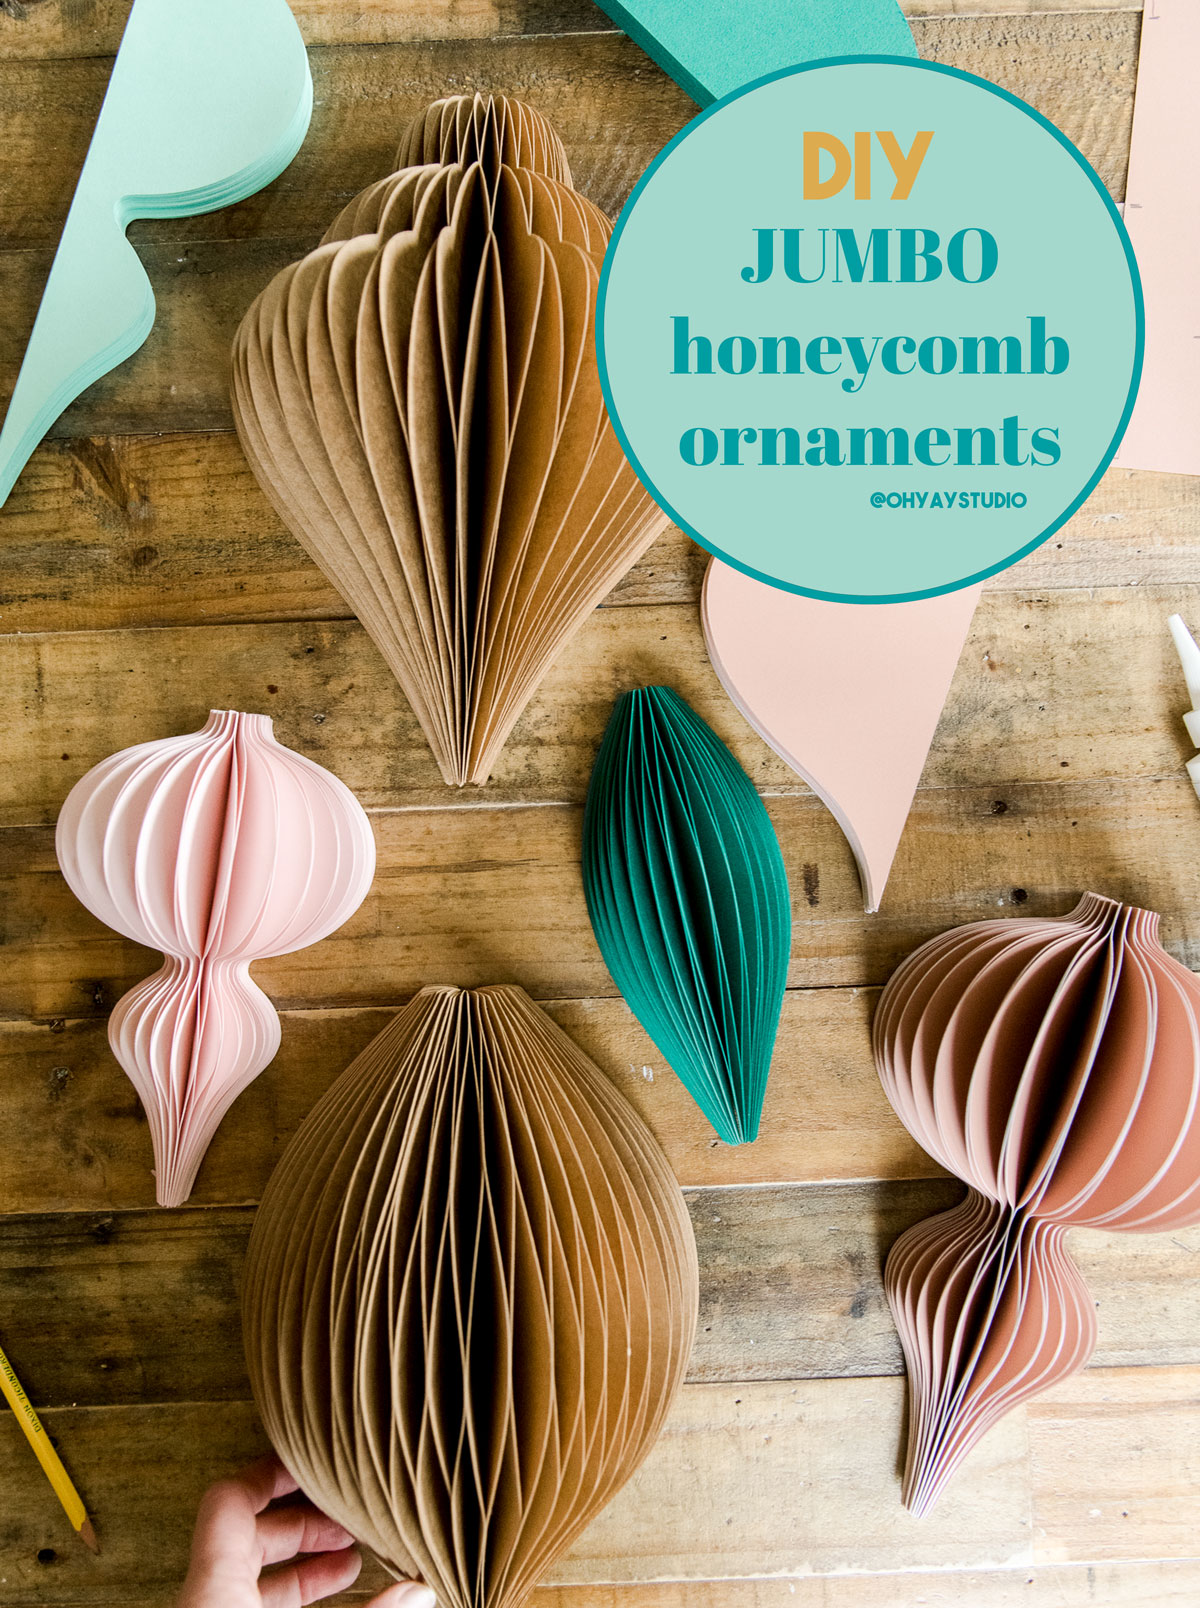 Jumbo honeycomb ornament DIY, Jumbo honeycomb ornaments, how to make honeycomb ornaments, Paper ornament DIY, honeycomb ornament DIY, window display ideas 